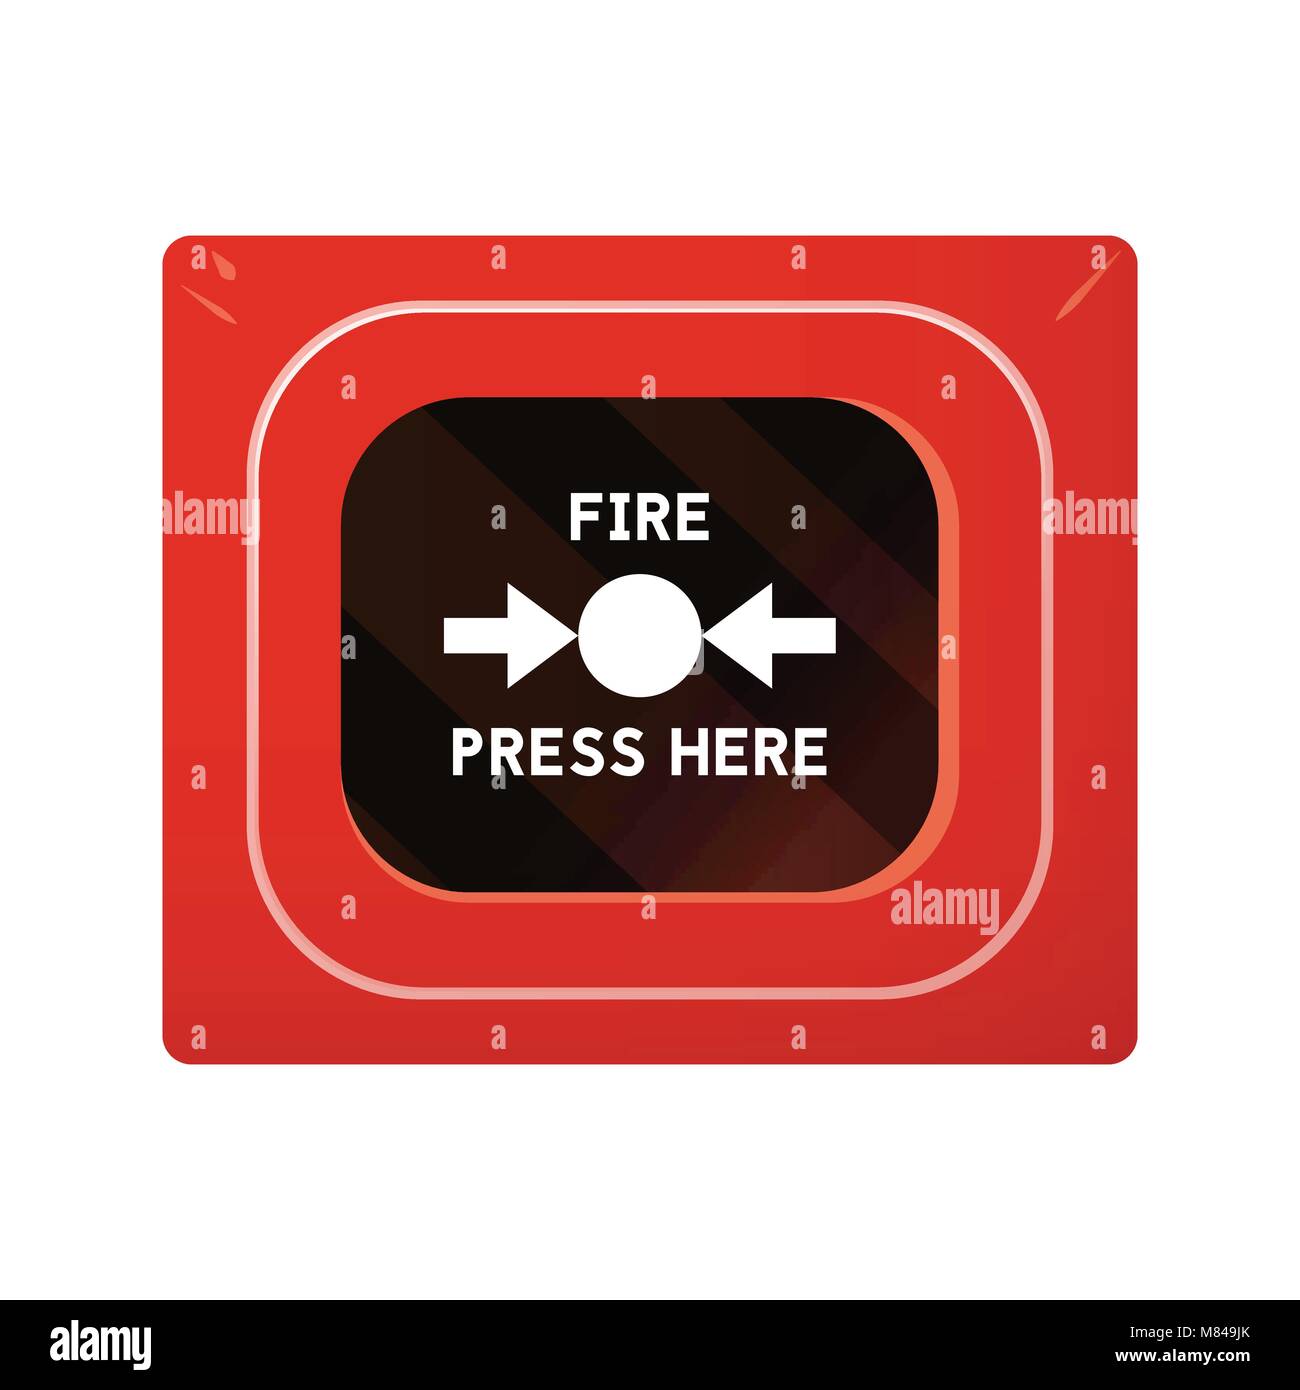 Red fire alarm box. Smoke detector vector illustration. Stock Vector